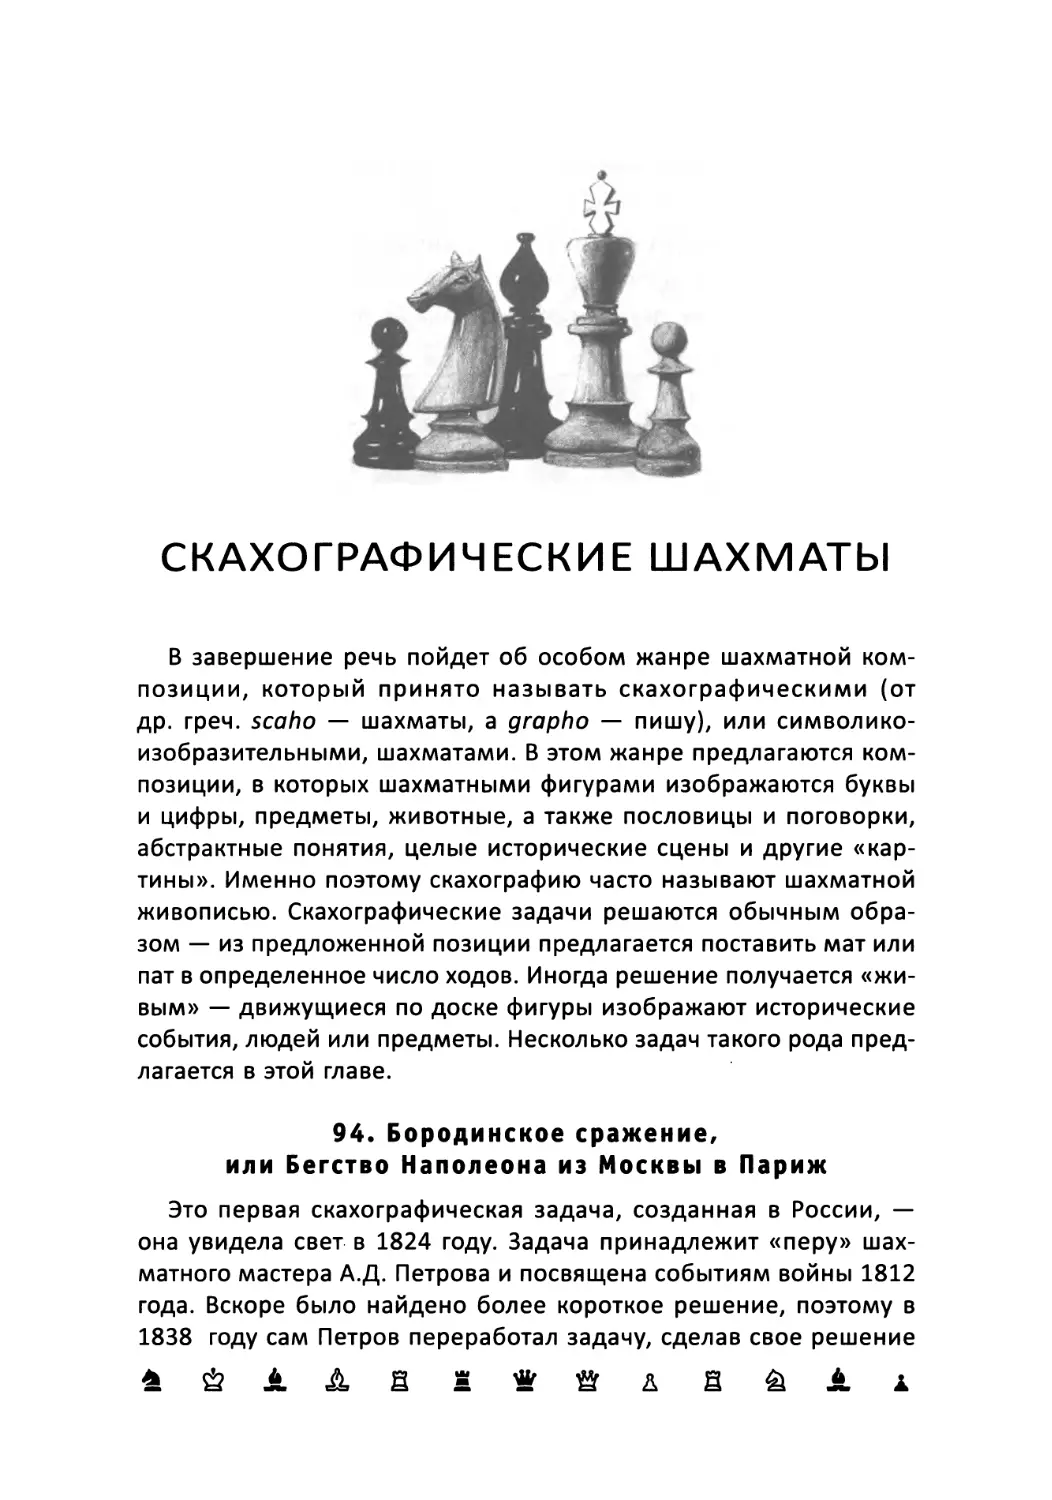 Скахографические шахматы